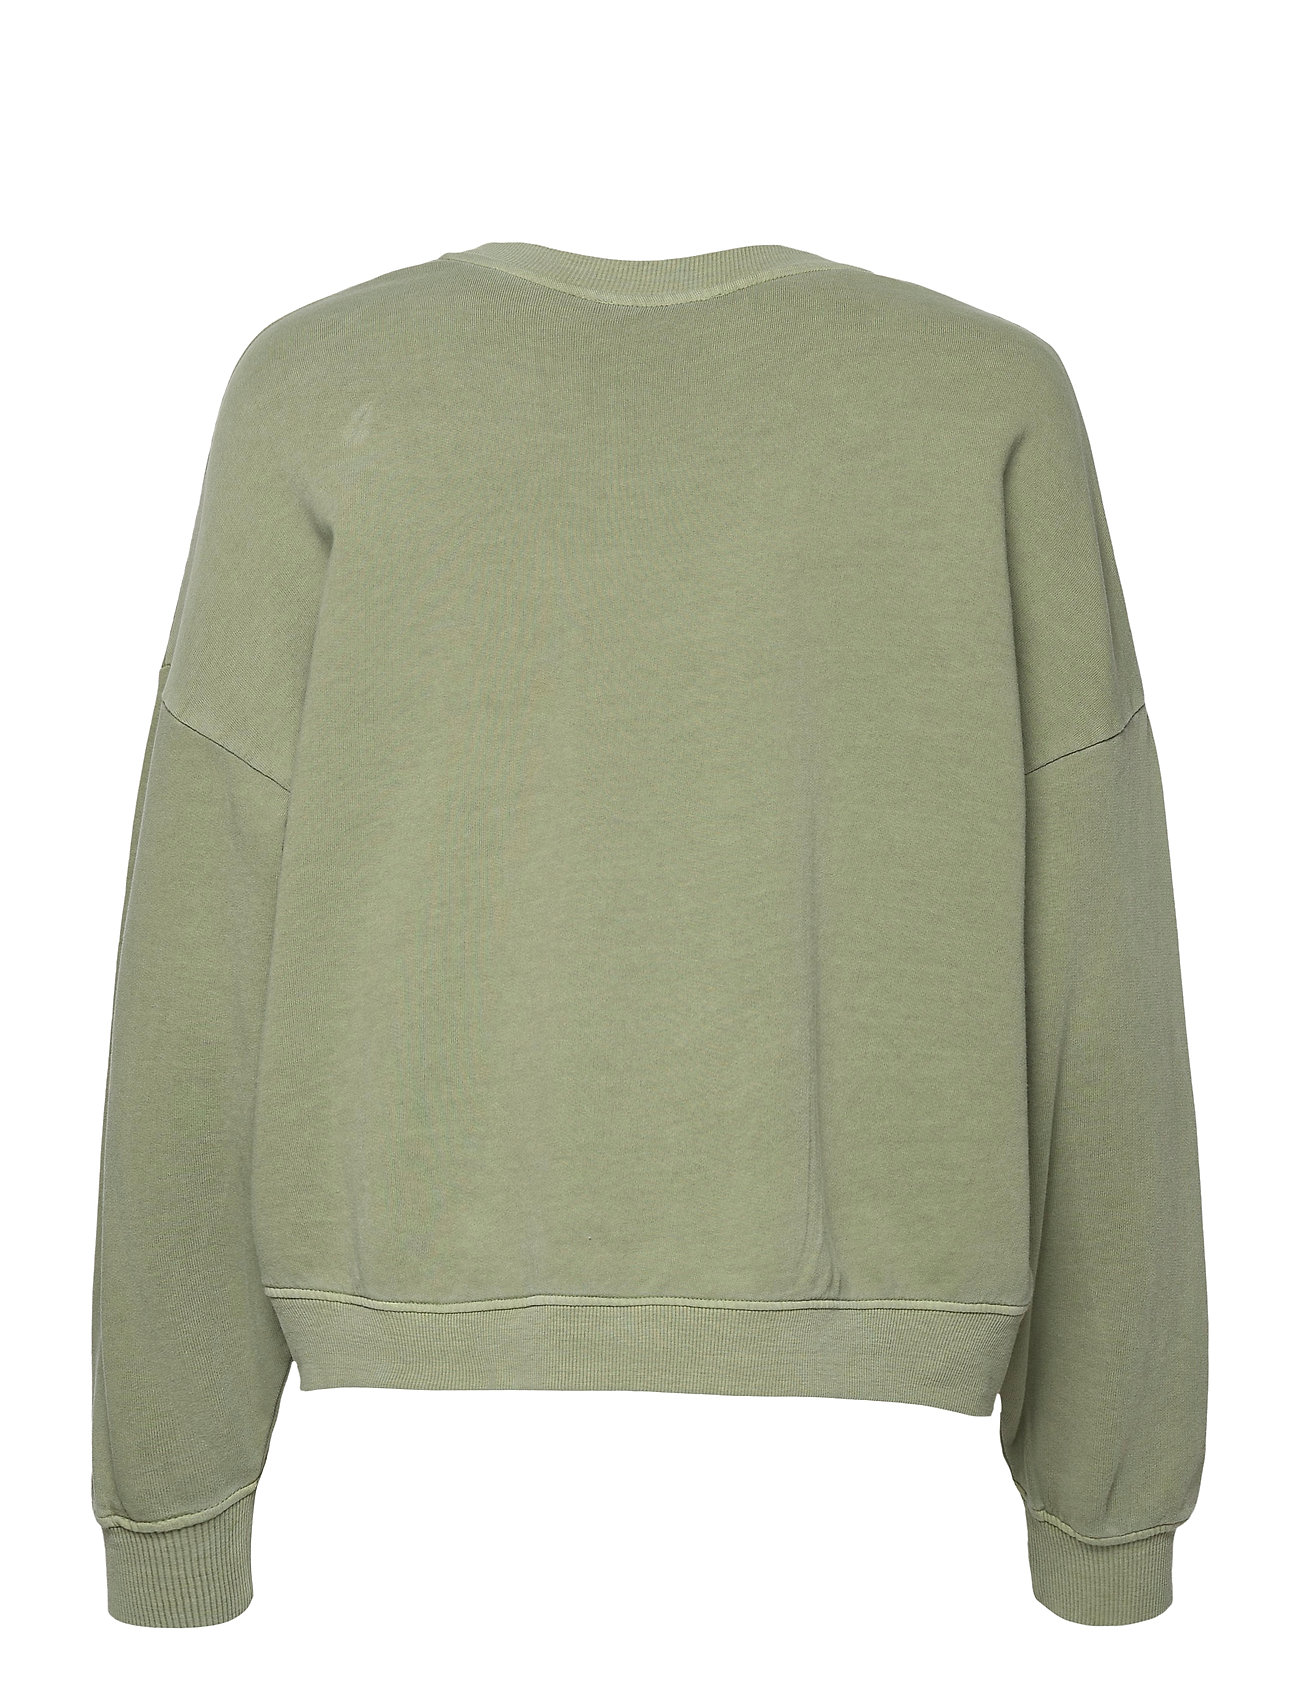 Sweatshirts Sweatshirt Trøje Grøn Casual sweatshirts fra Esprit til i - Pashion.dk